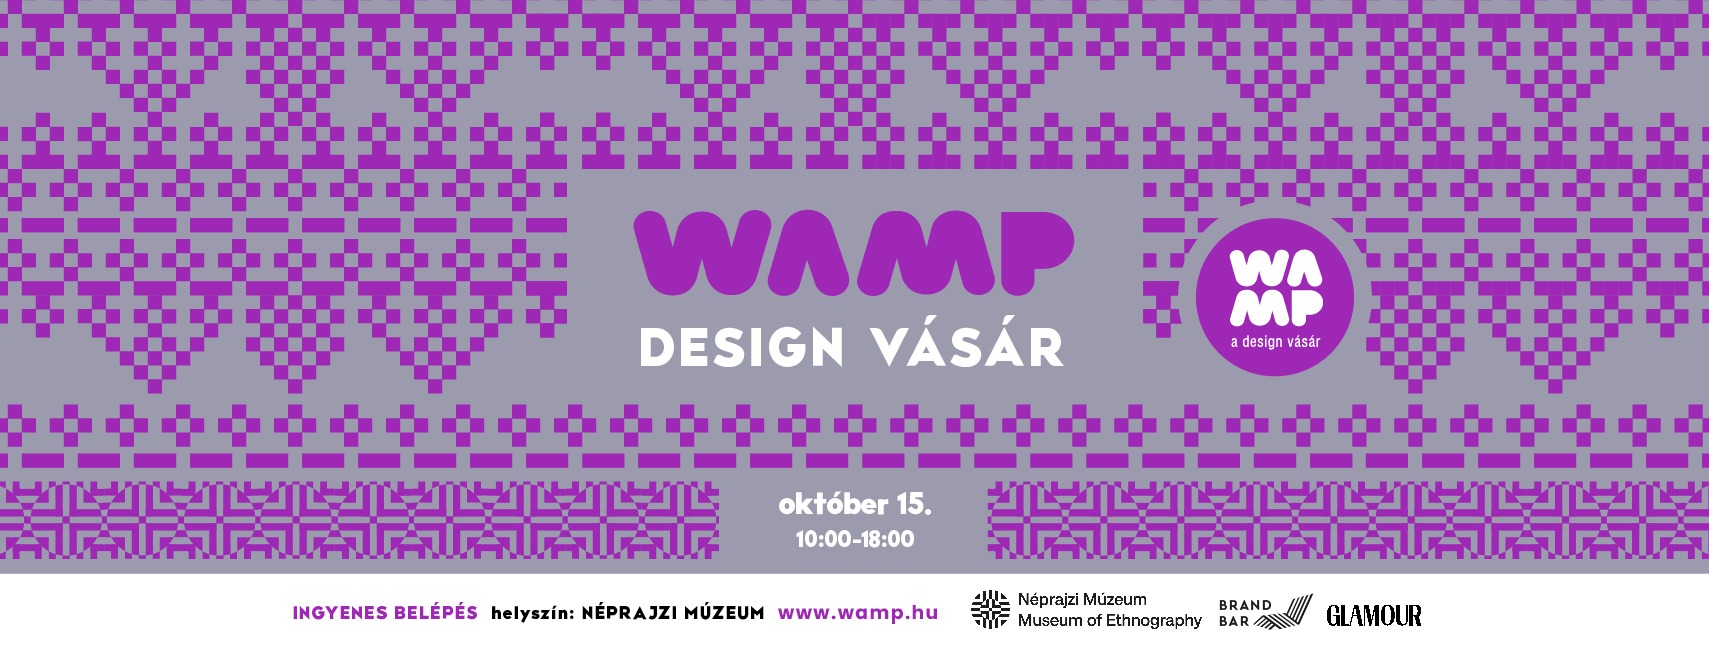 Wamp design vásár